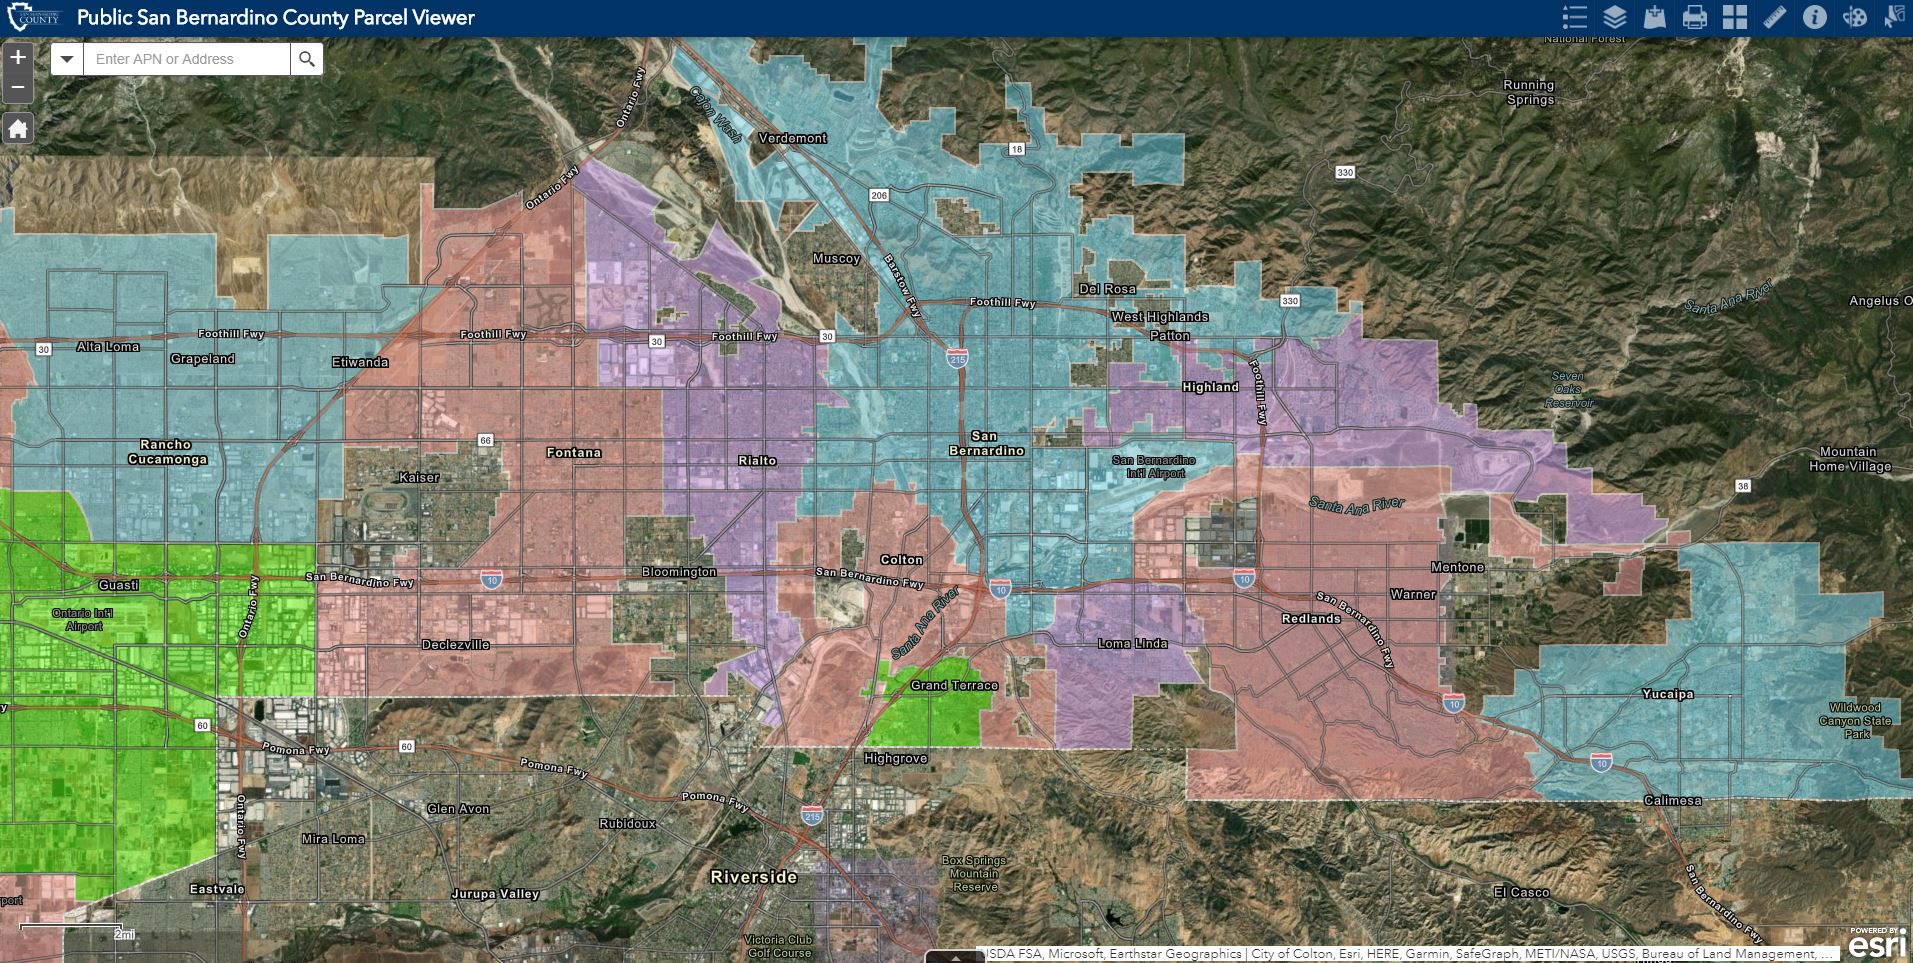 Assessor Property Information San Bernardino County AssessorRecorder